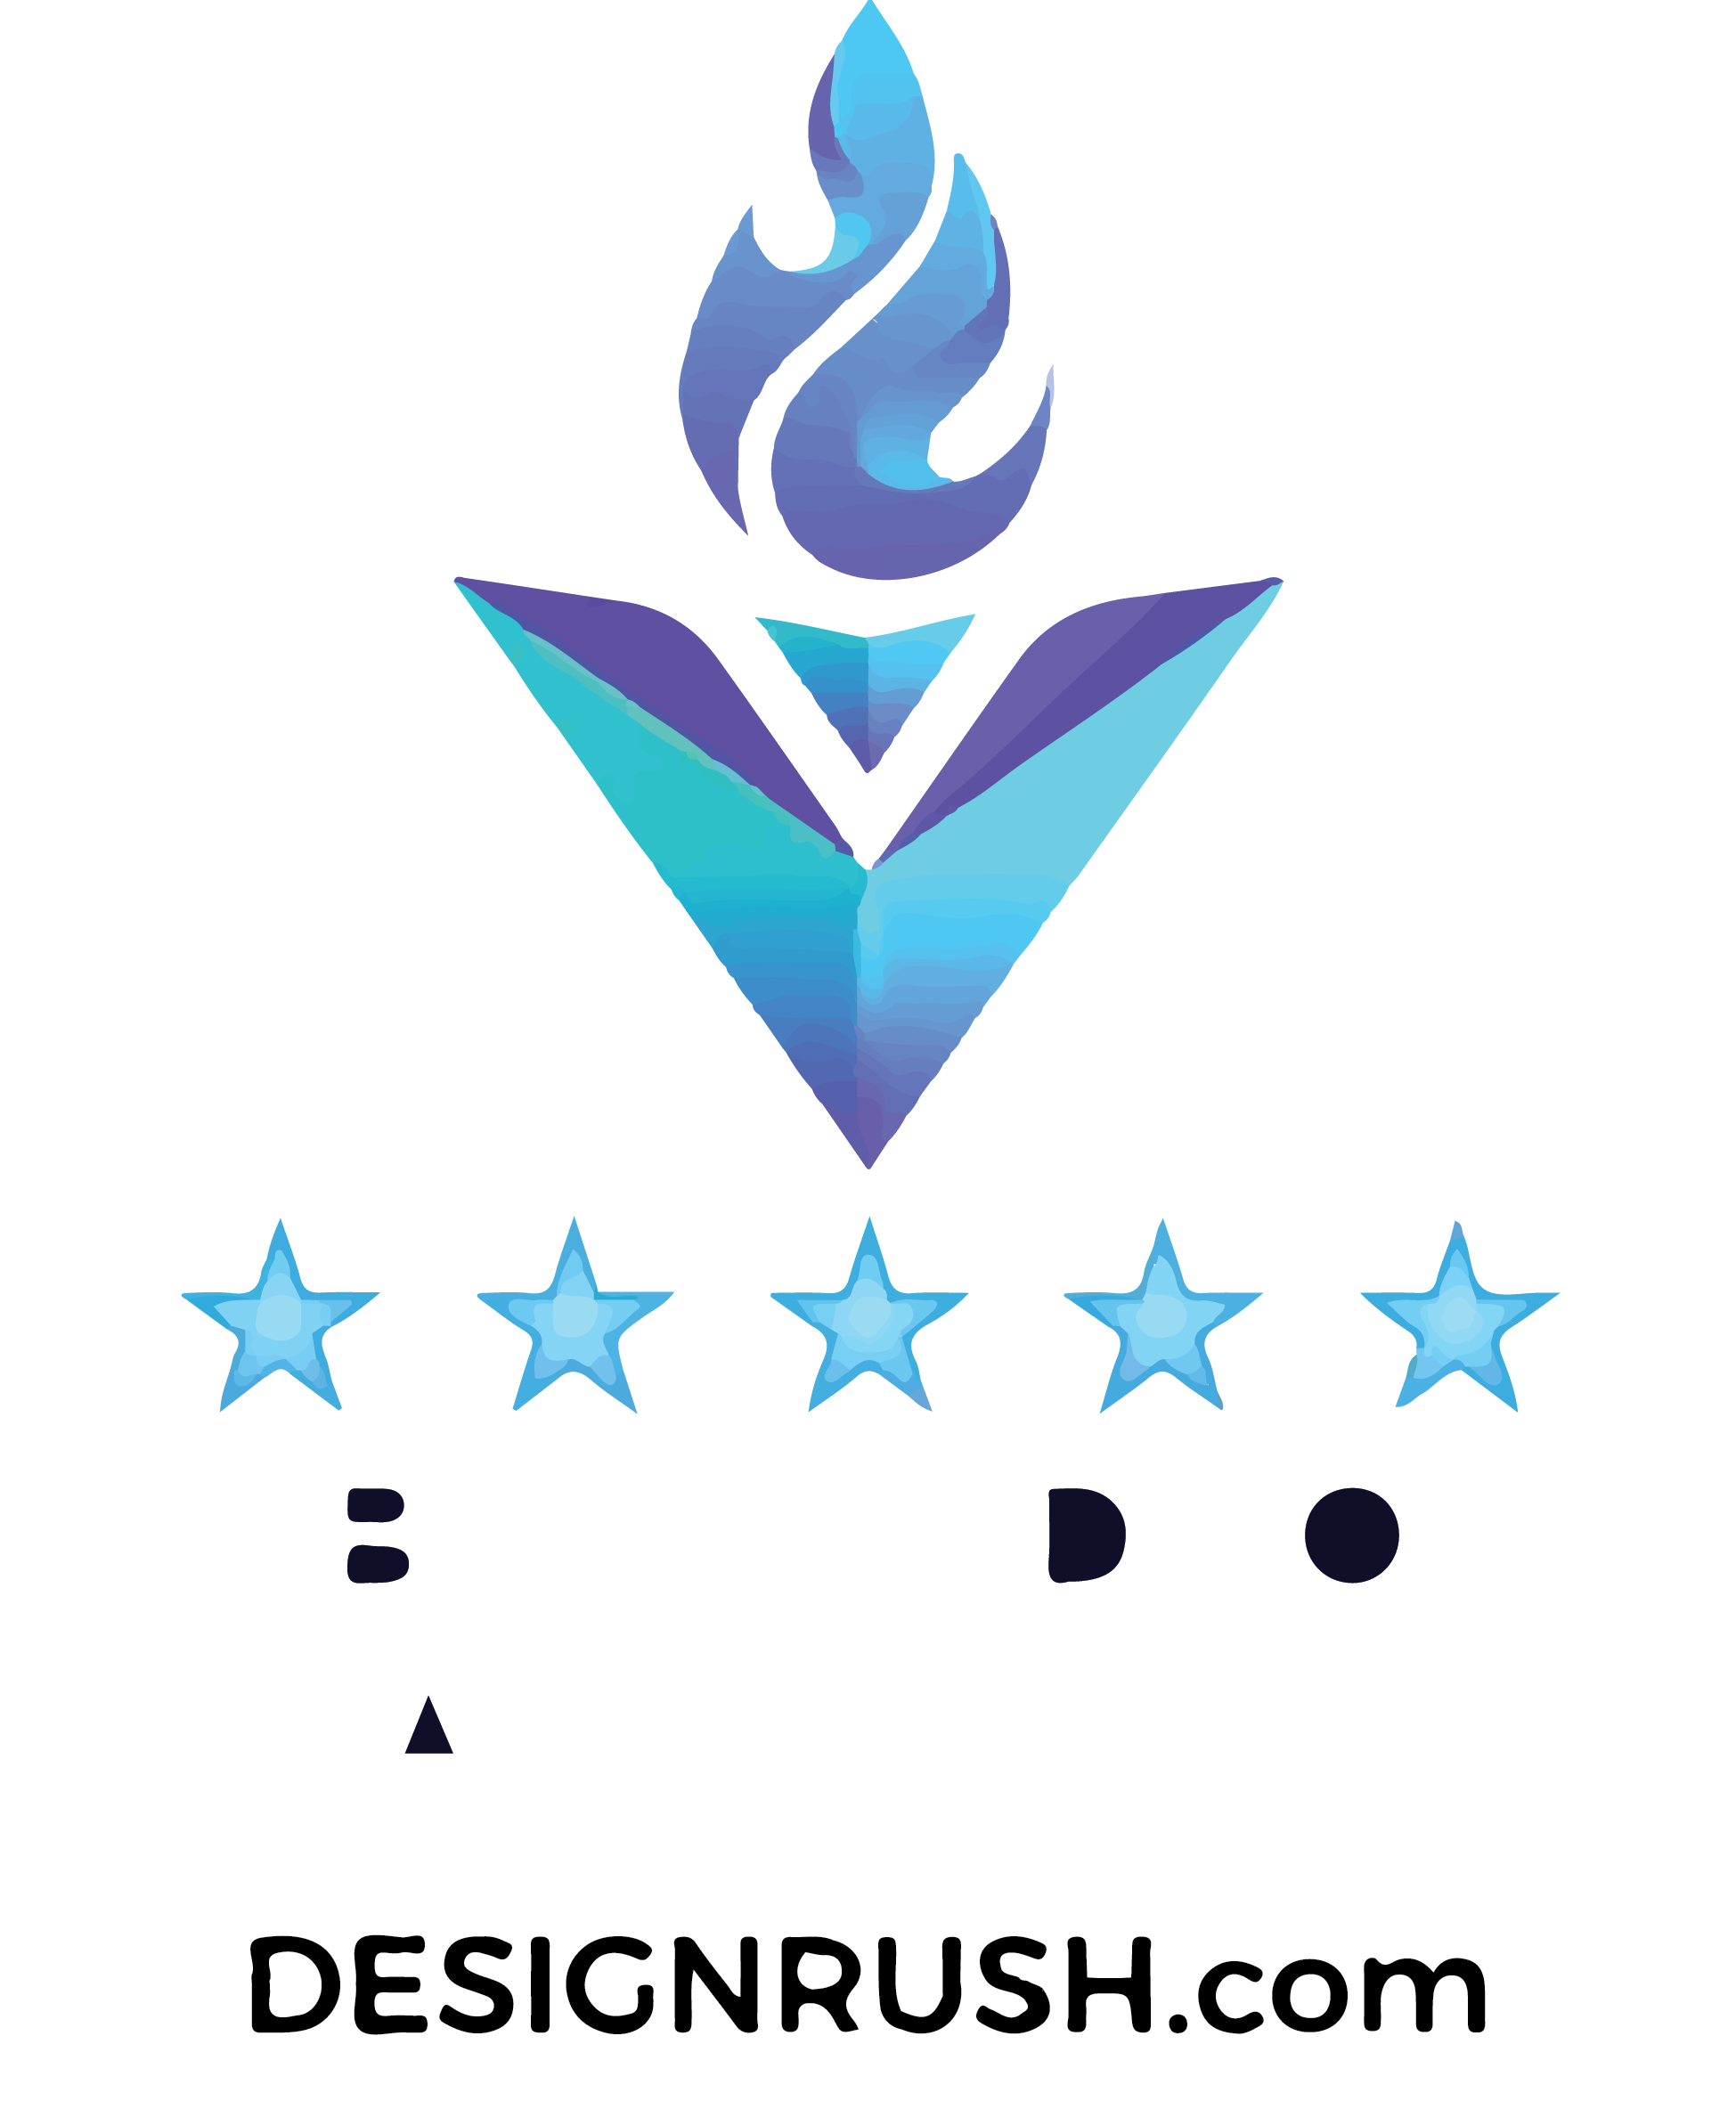 Design Rush Video Agency